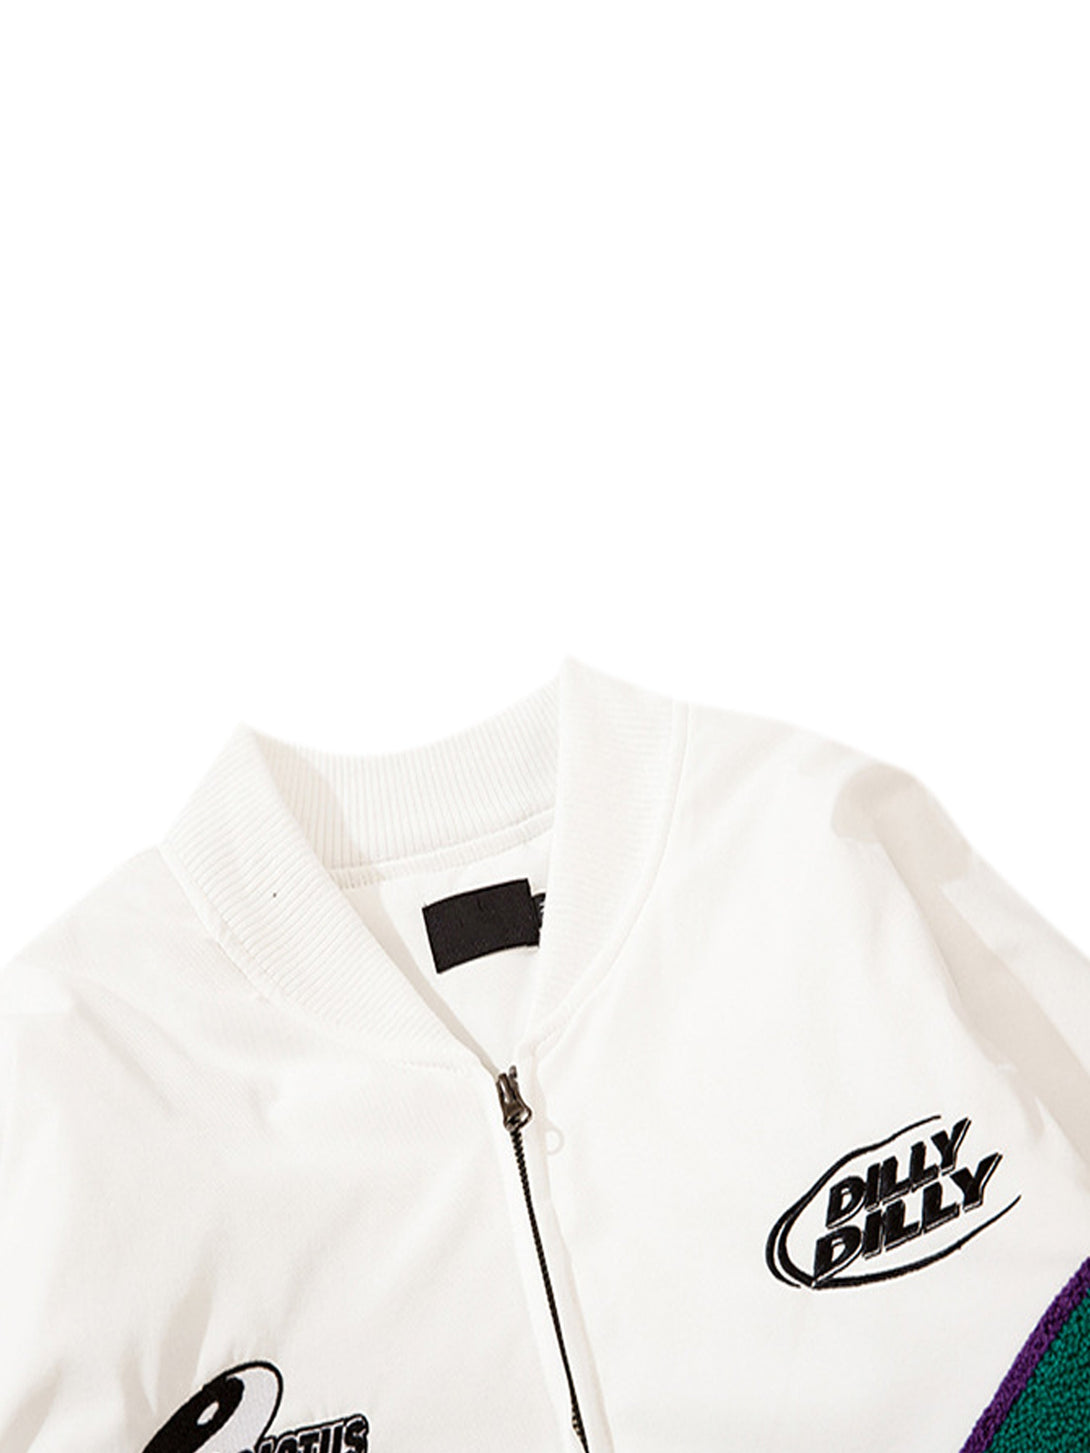 Majesda® - etter Embroidery Baseball Jackets- Outfit Ideas - Streetwear Fashion - majesda.com